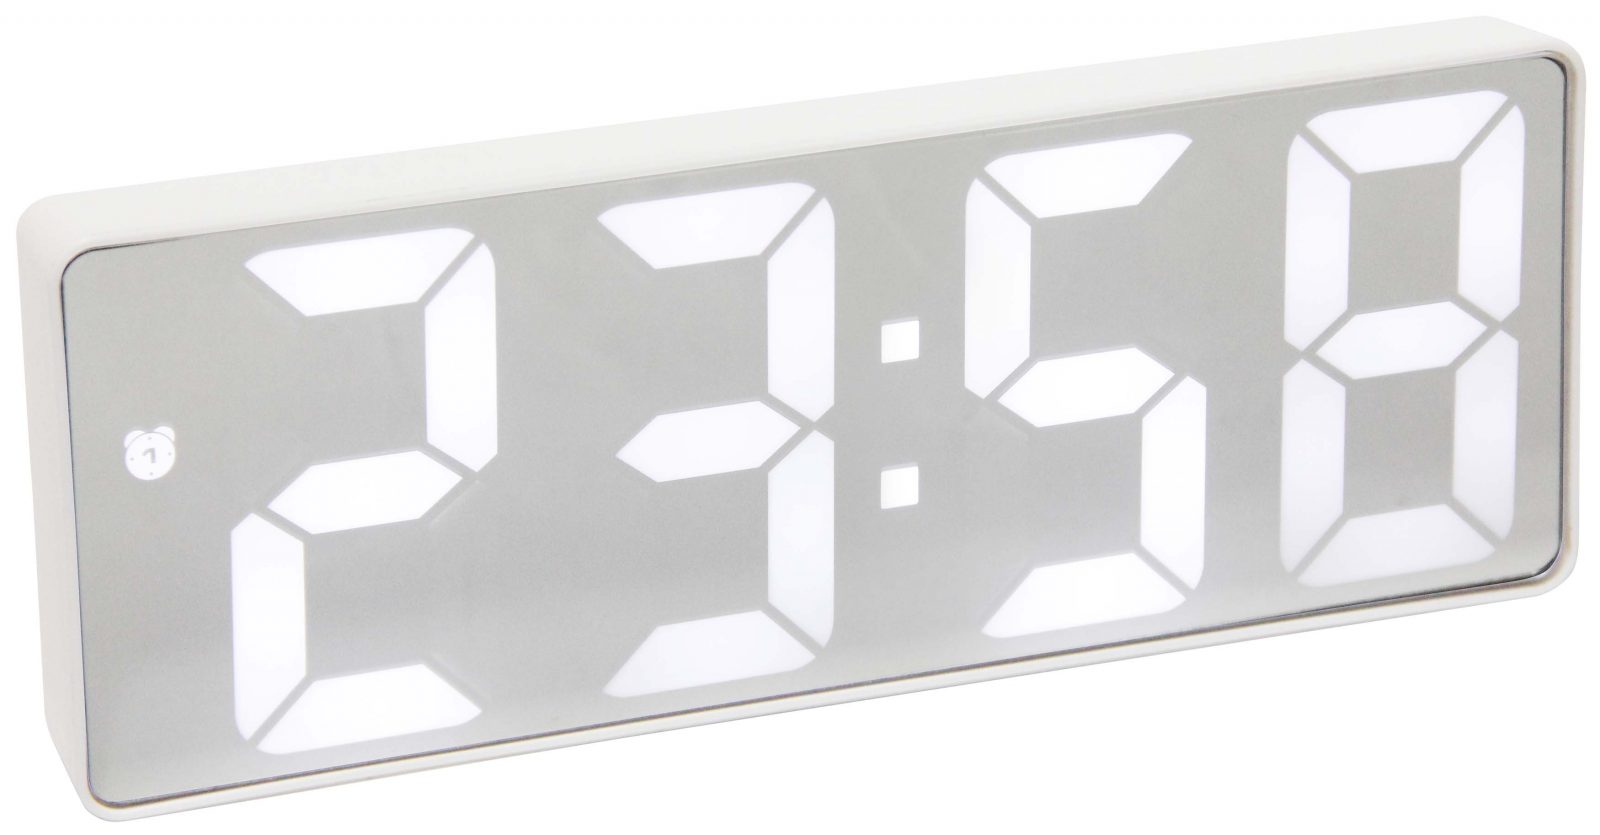 white digital clock